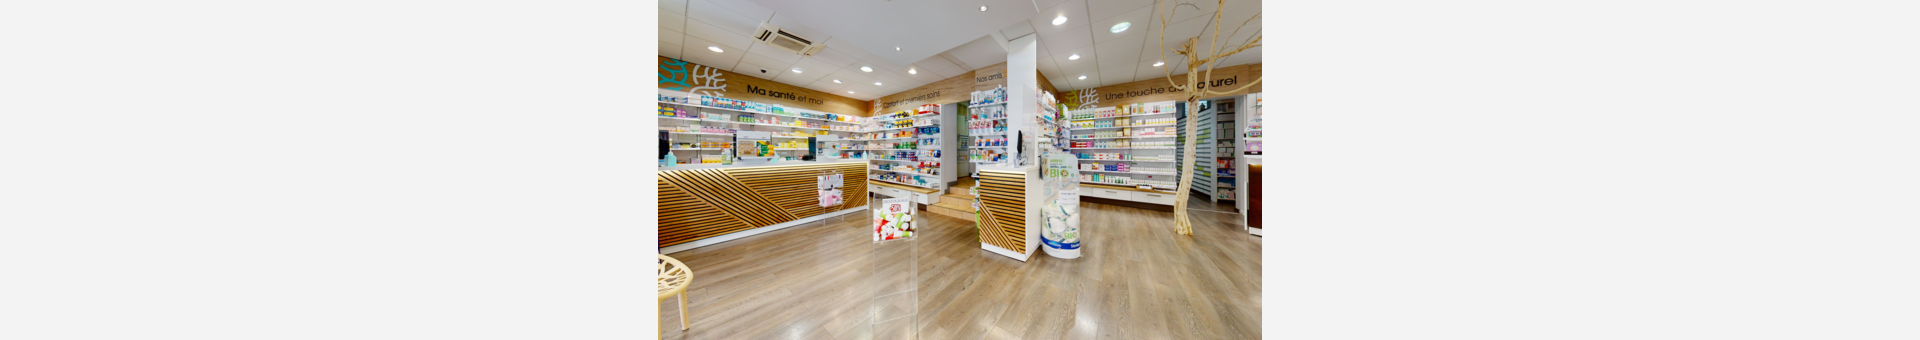 Pharmacie Picat-Ramos,Fronton